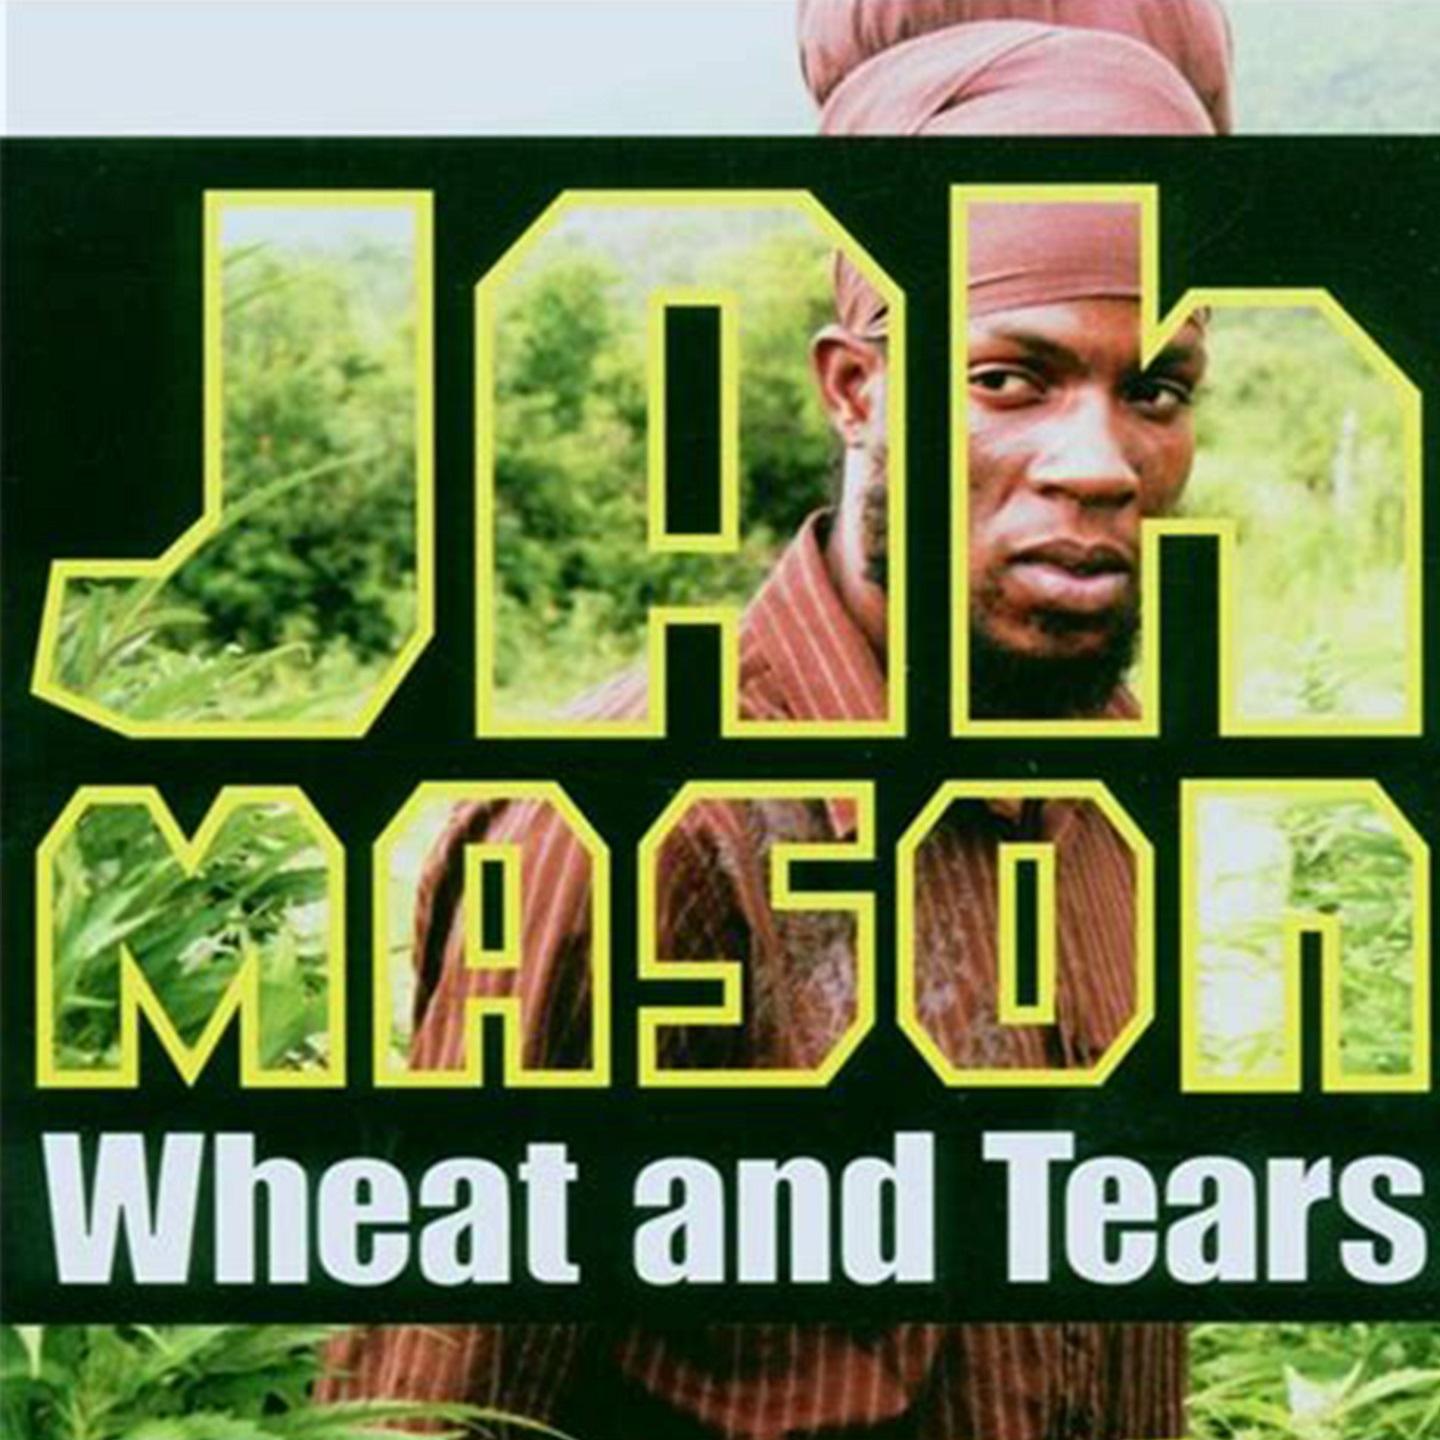 Wheat and Tears